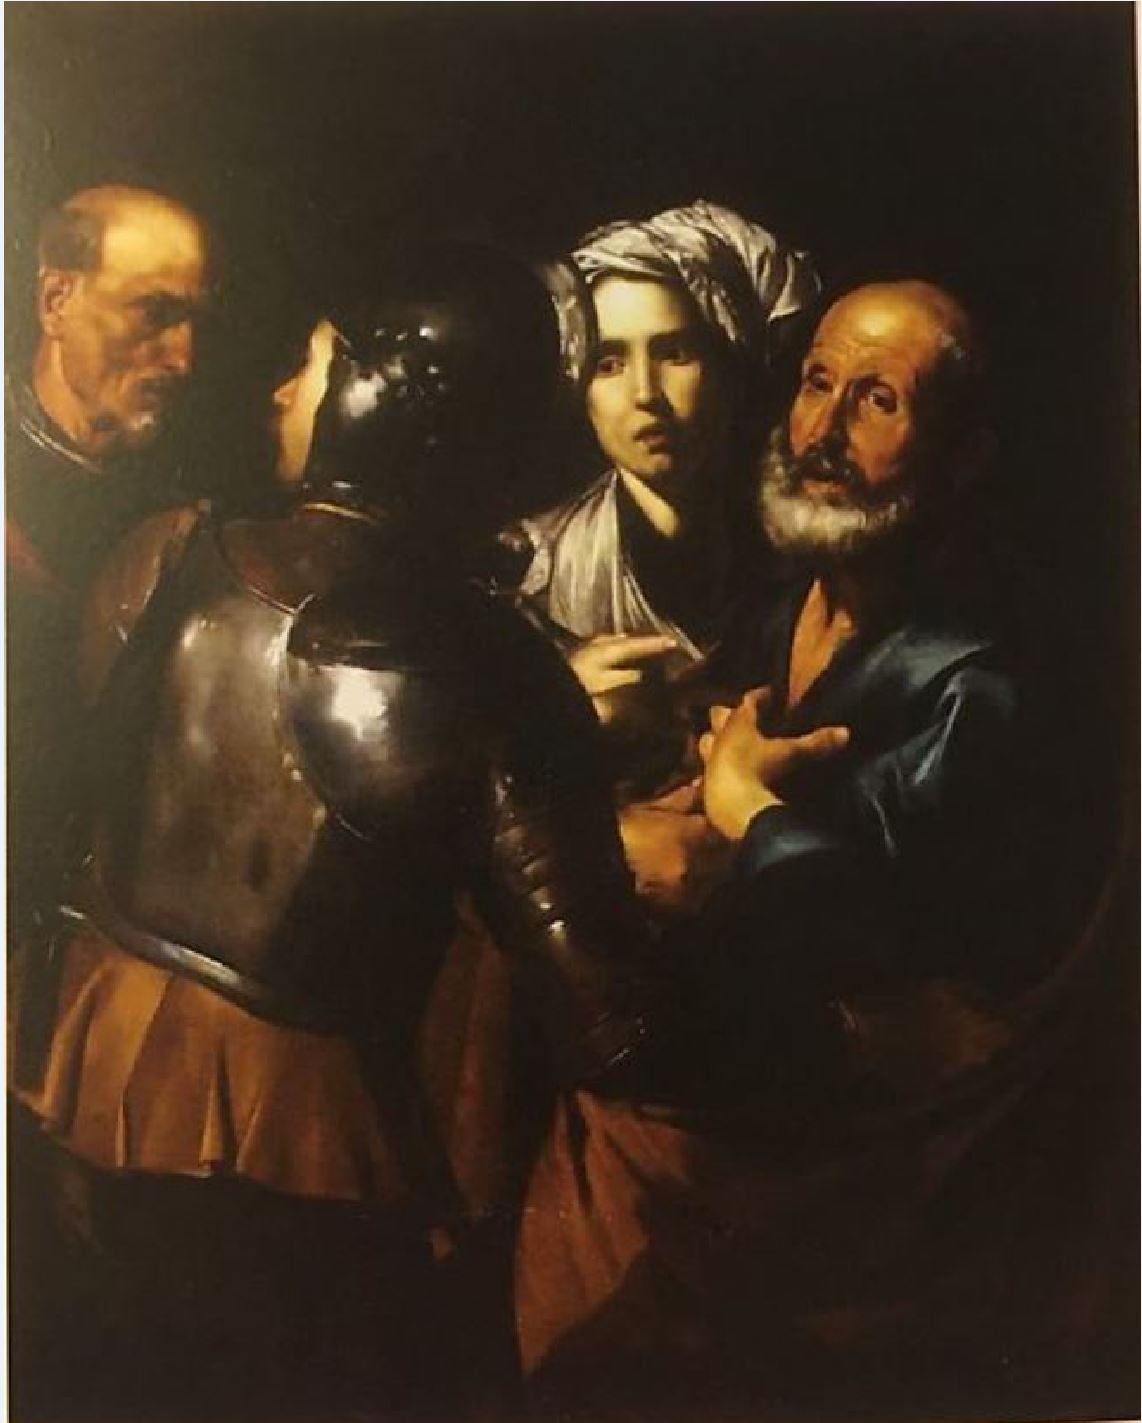 1615 ca Jusepe de Ribera, Denial of Saint Peter location unknown from Guillaume Kazerouni and Guillaume Kientz, Ribera à Rome, autour de l’Apostolado, 2015, p. 37, fig. 16